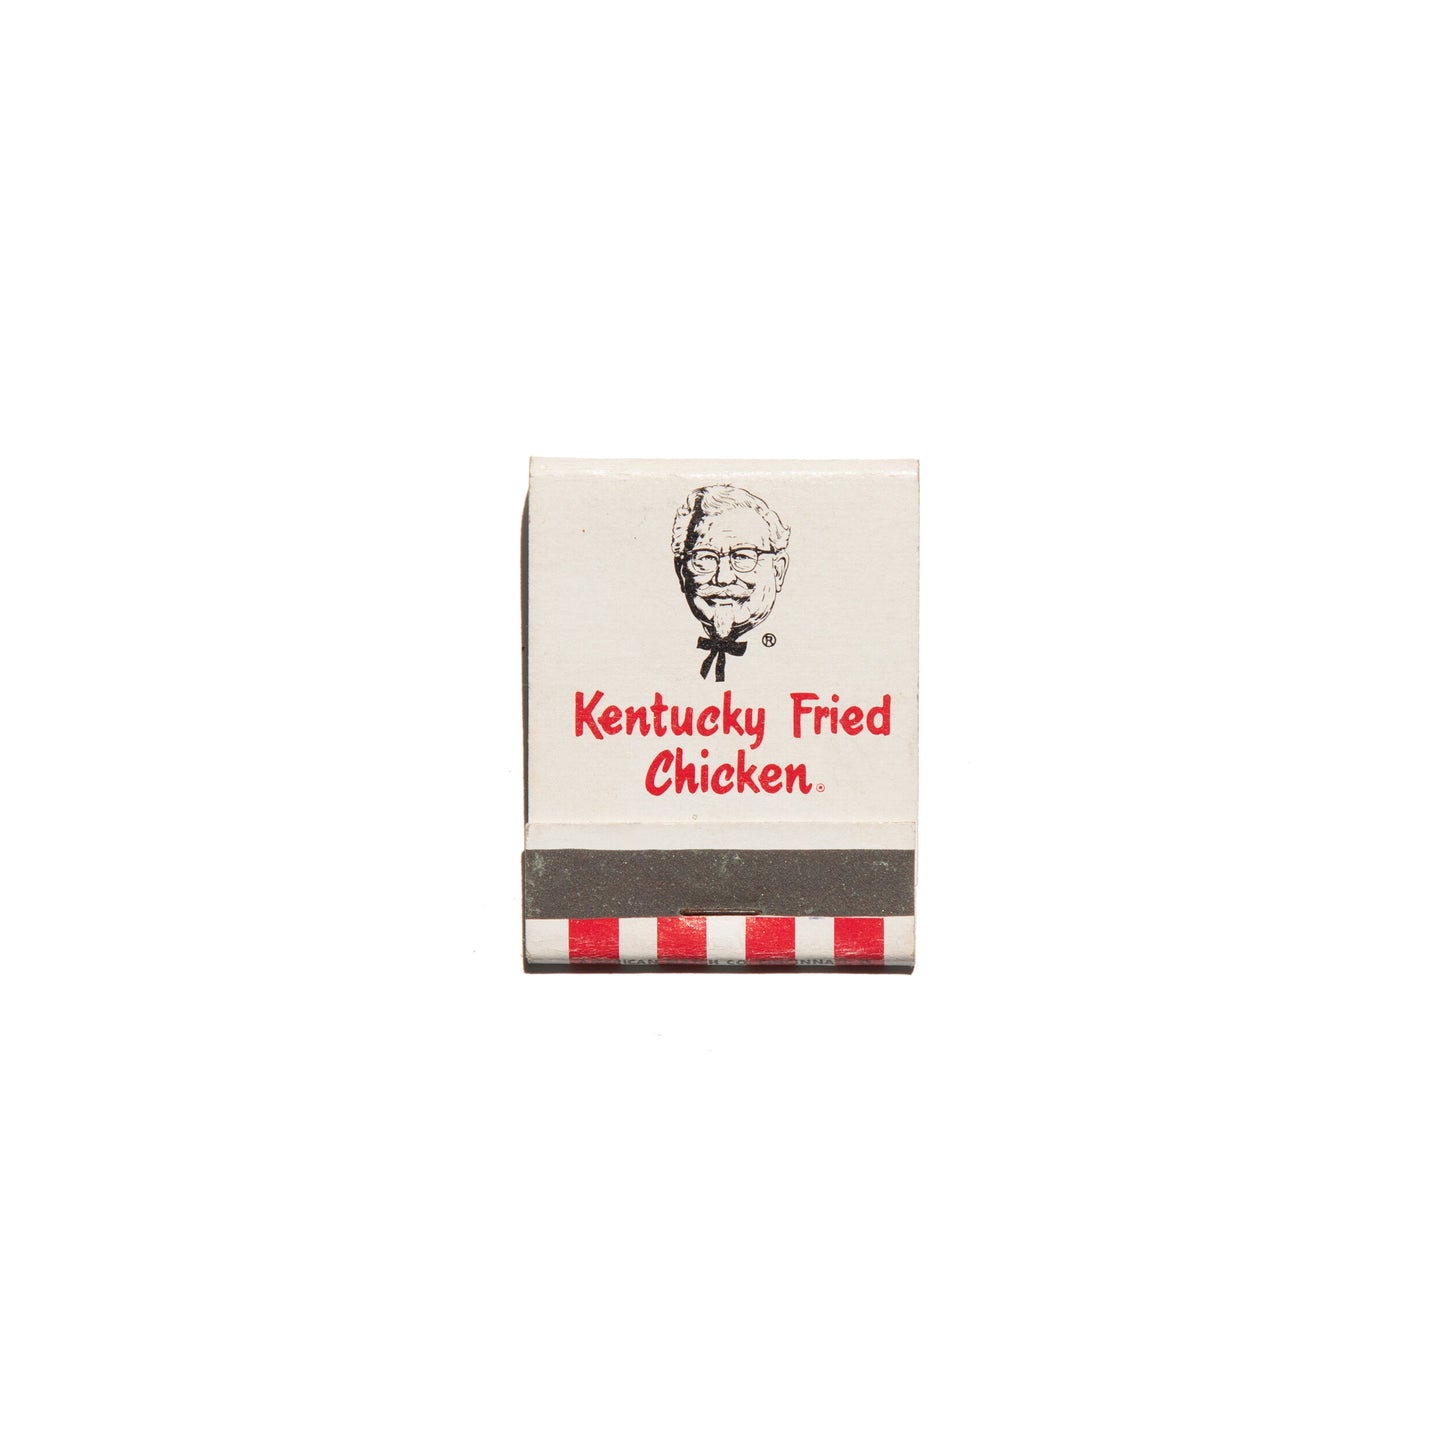 Kentucky Fried Chicken (Back)